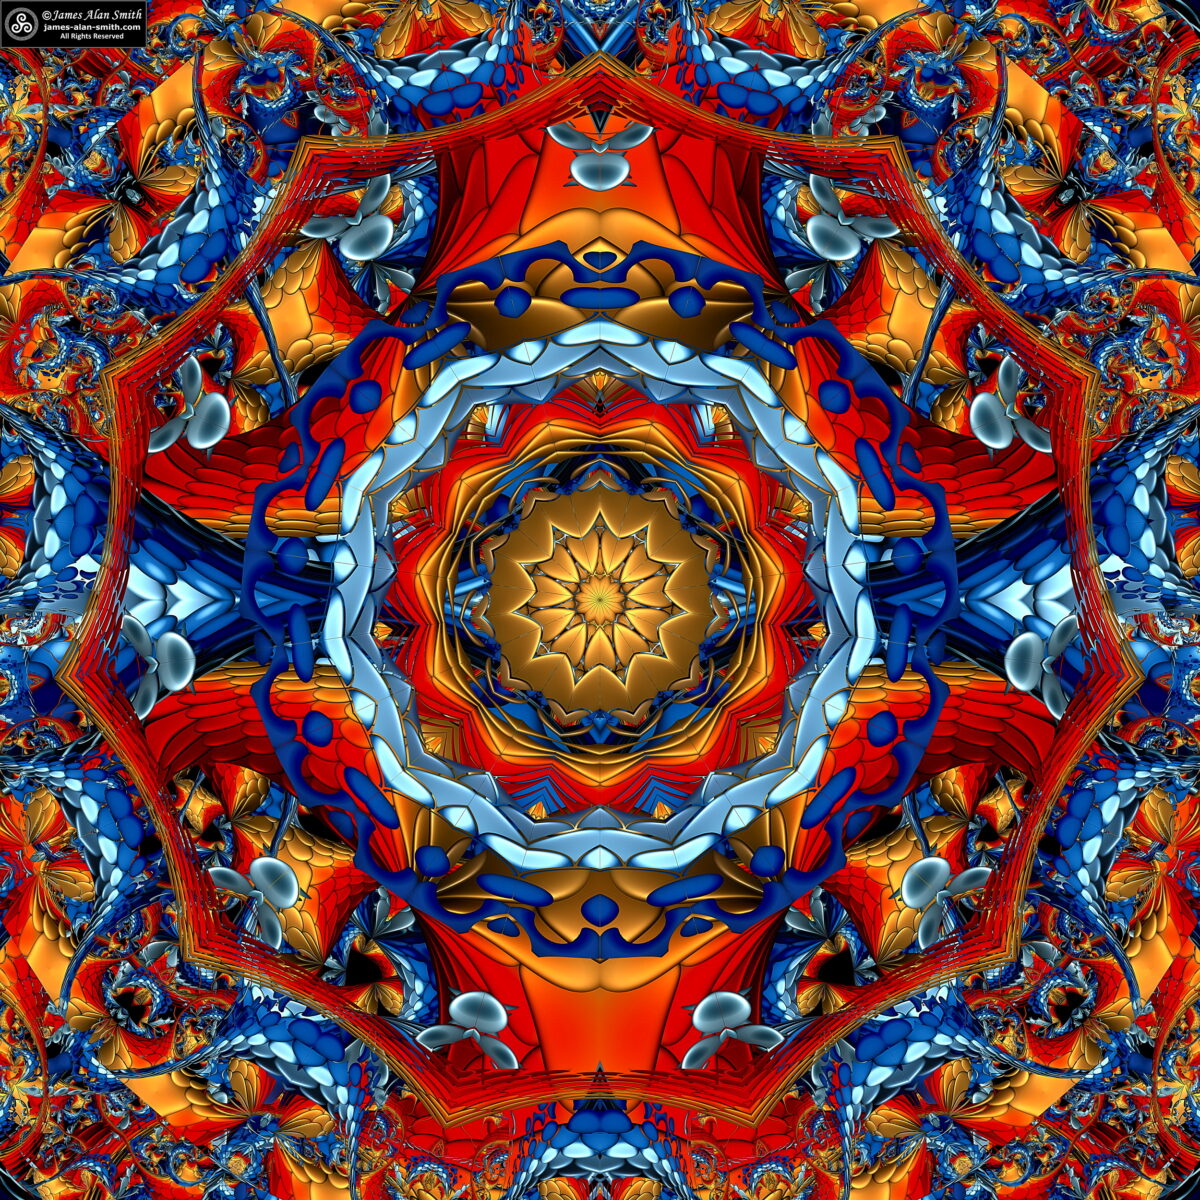 Sun Petal Mandala: Artwork by James Alan Smith